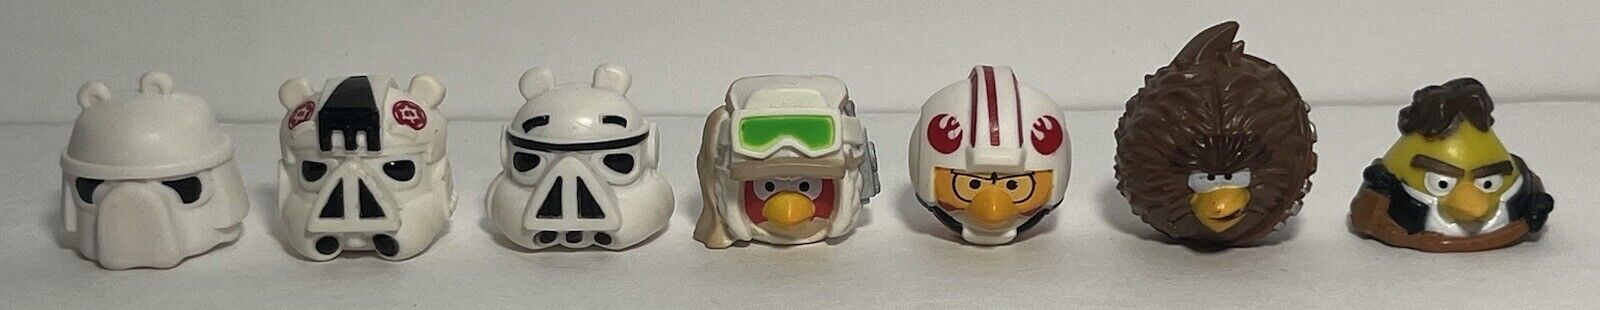 Angry Birds Star Wars Jenga Game Replacement Mini Figures Lot Hasbro 2012